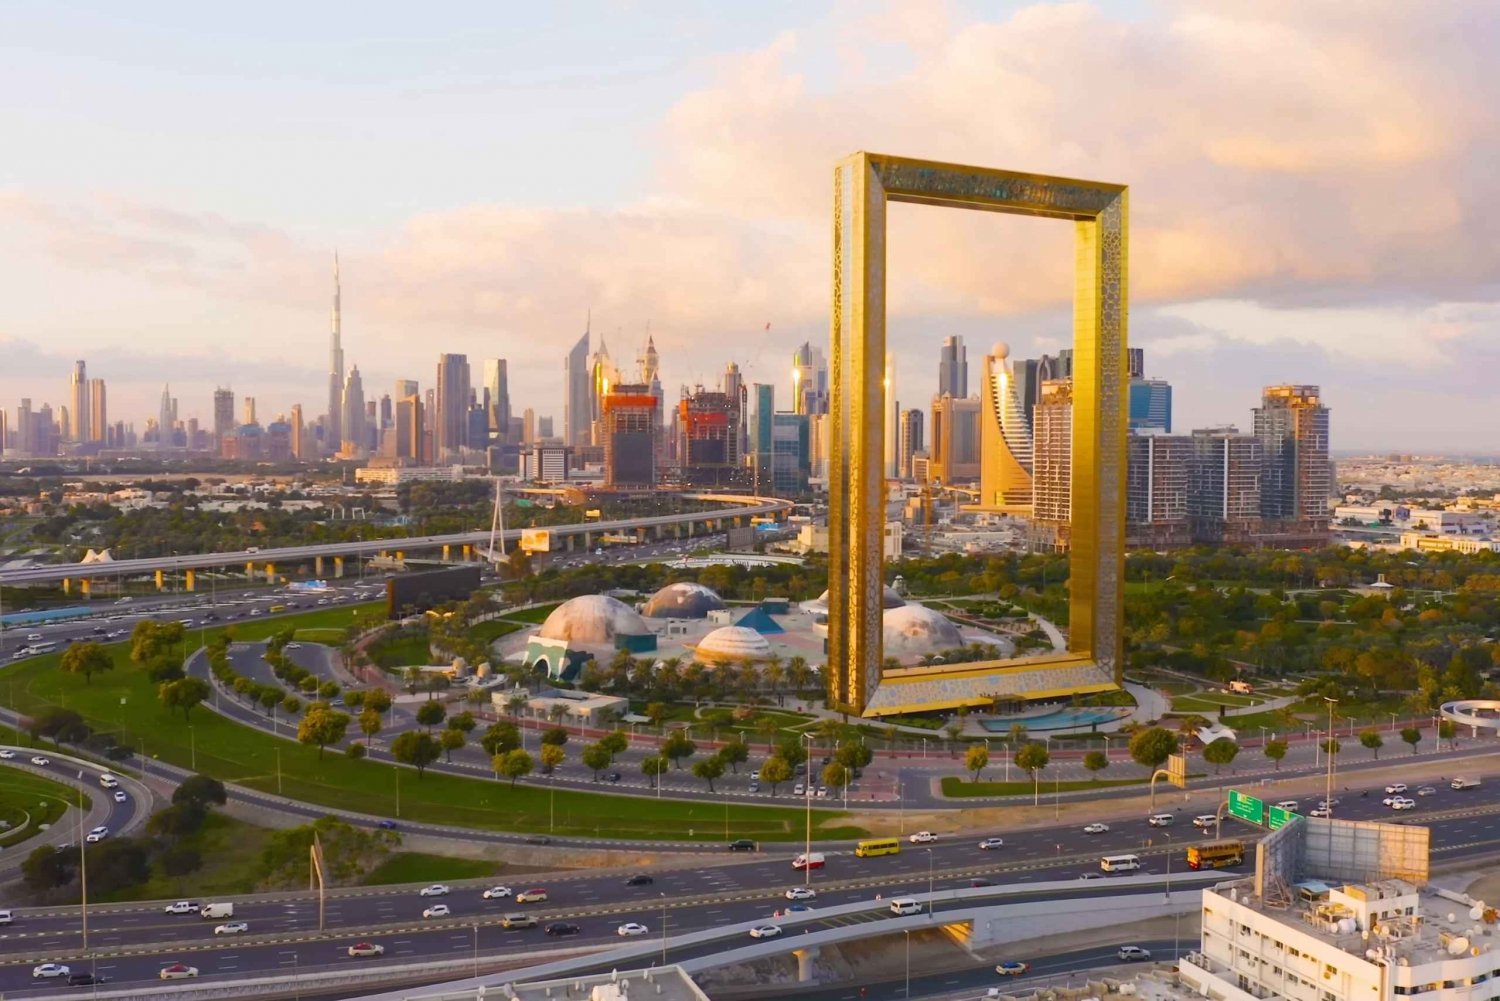 Dubai: Entry Ticket to the Dubai Frame with Deck Access